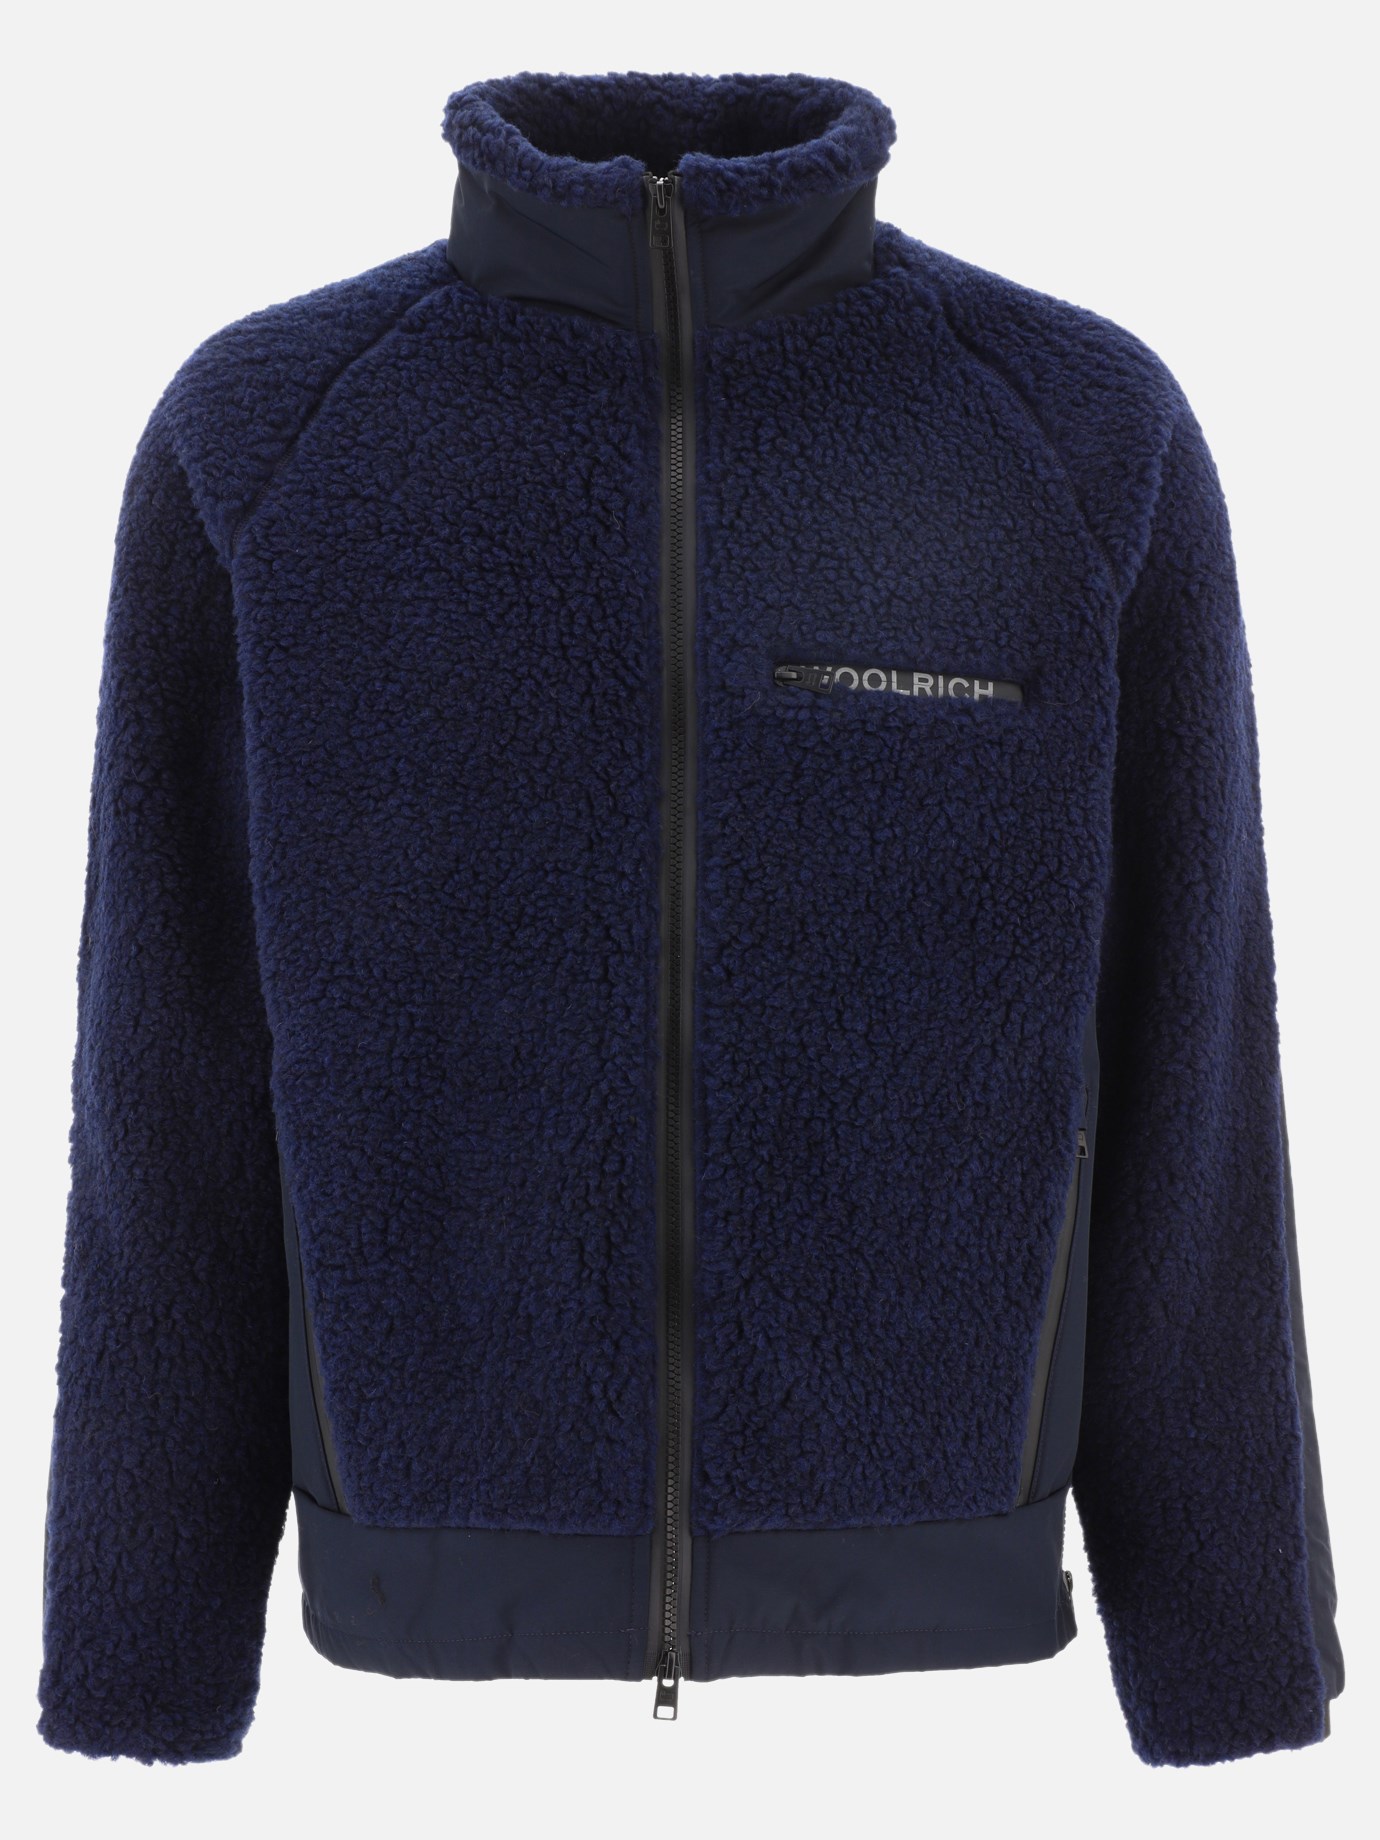  Sherpa Hybrid  jacketby Woolrich - 3